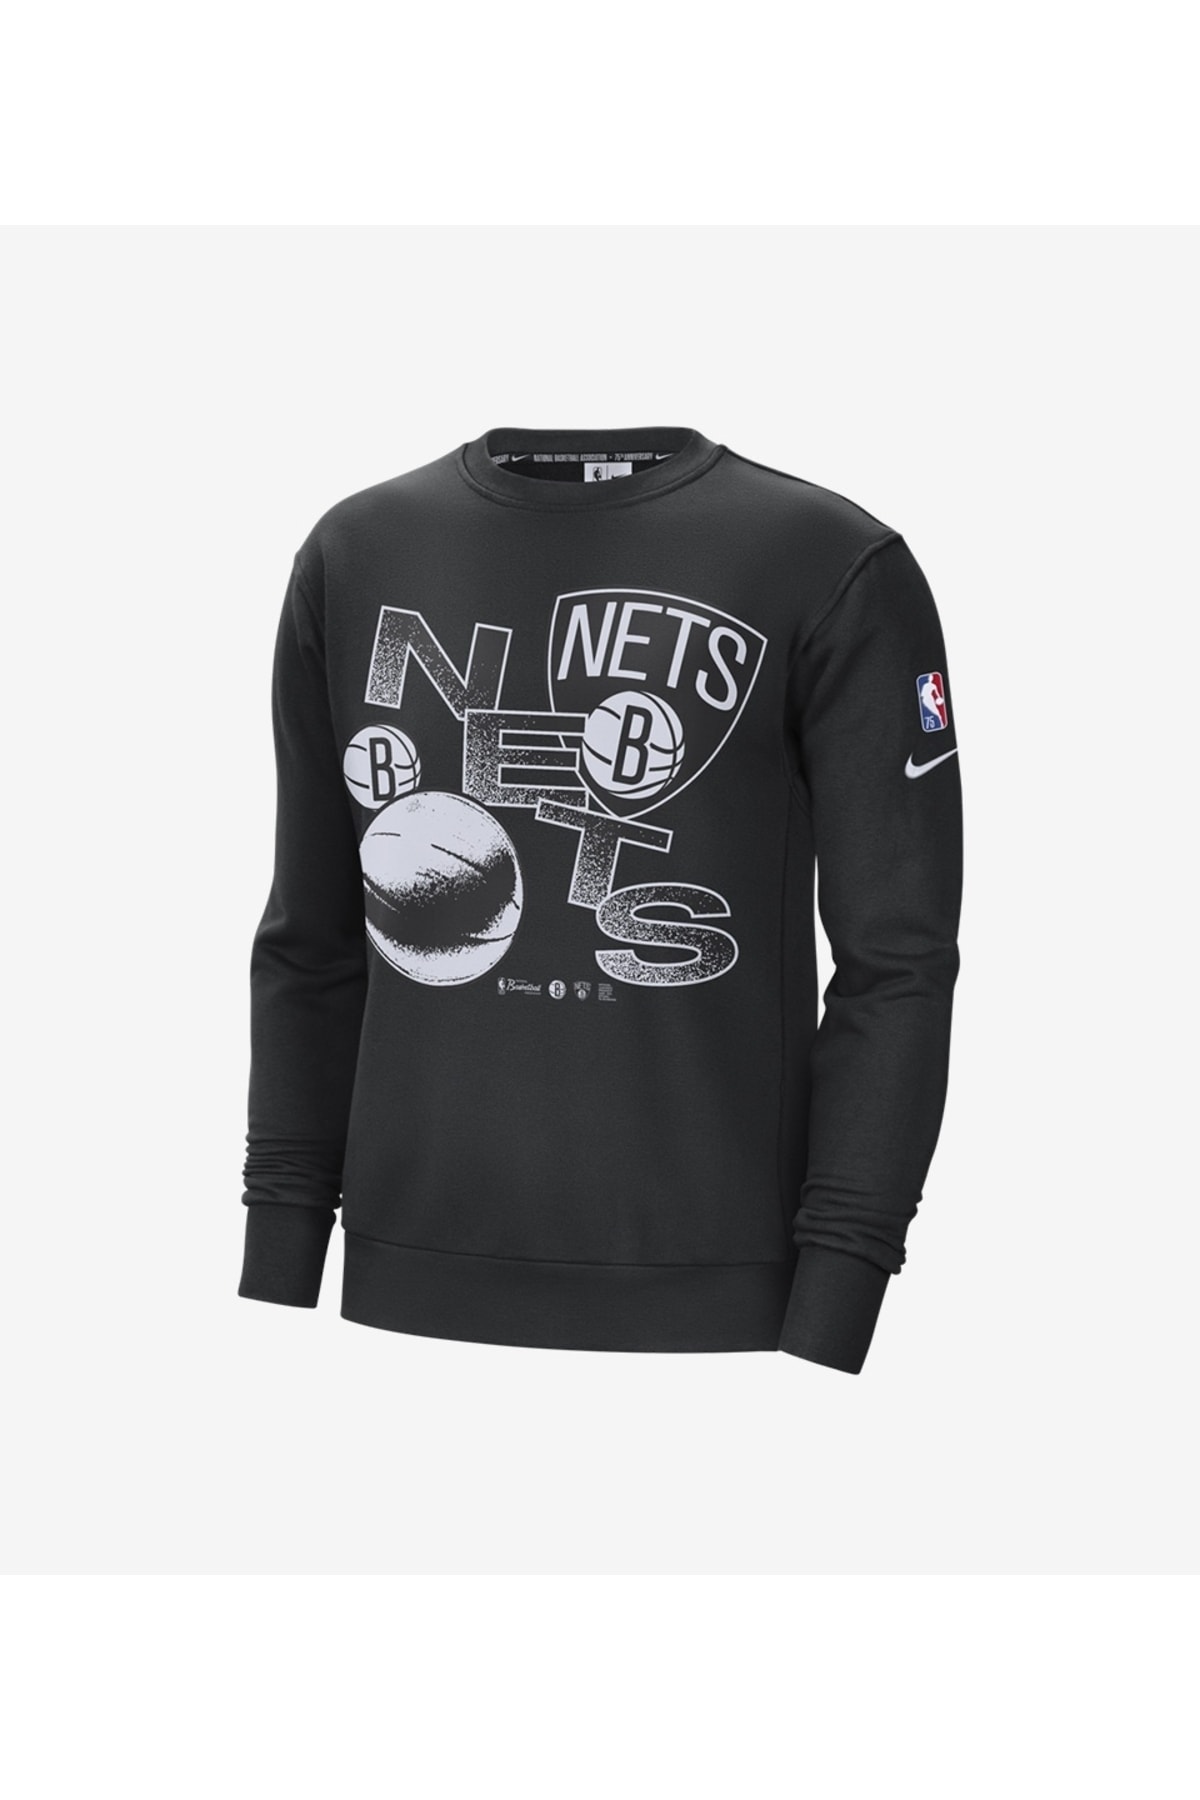 Nike Nets Courtsıde Crewneck Sweatshirt Dh9428-010